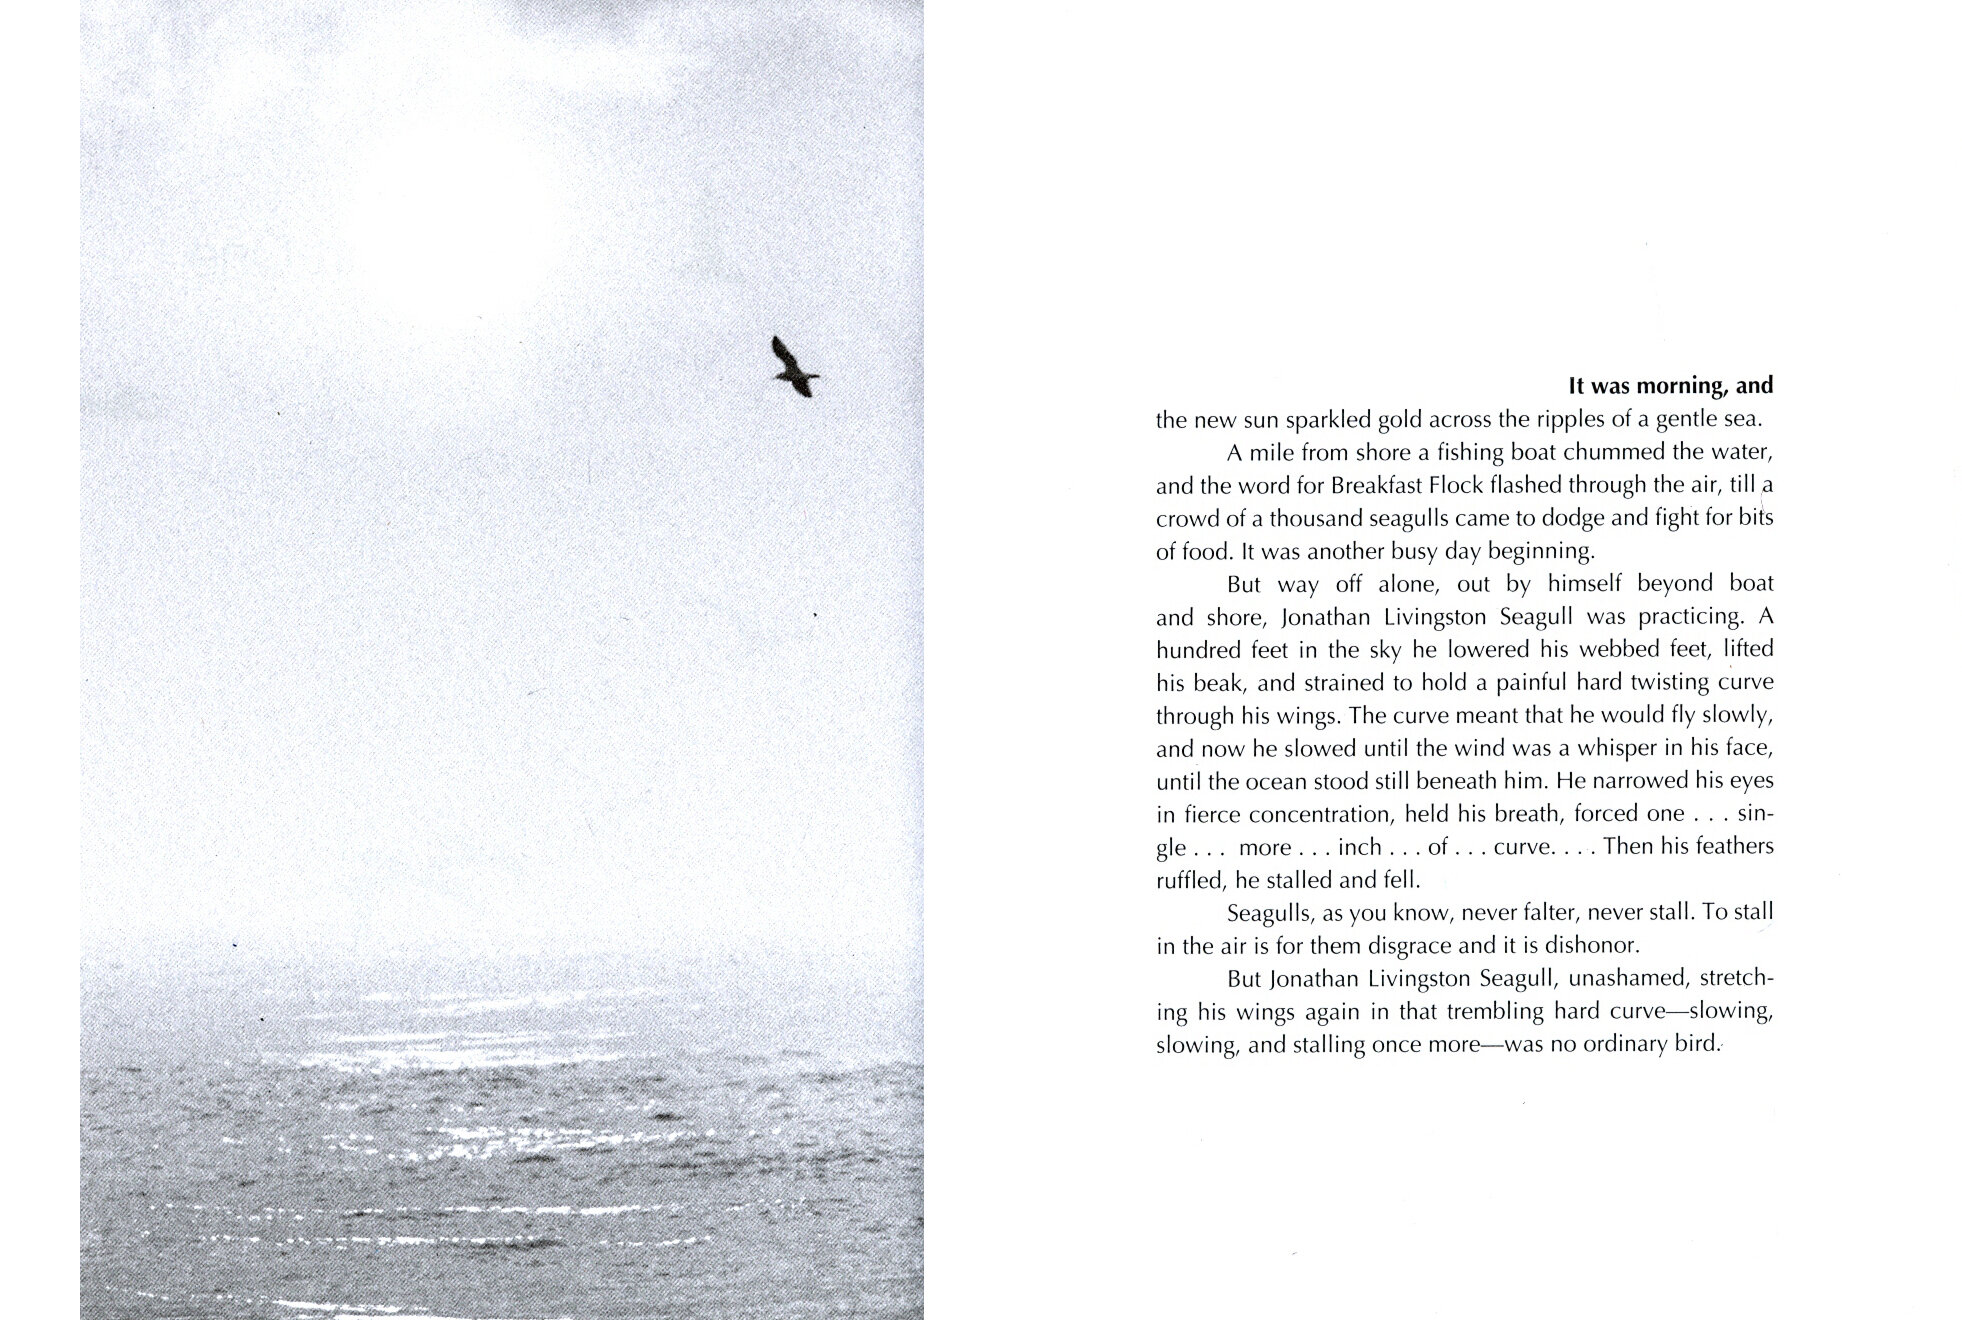 Jonathan Livingston Seagull (Річард Бах) - фото №3